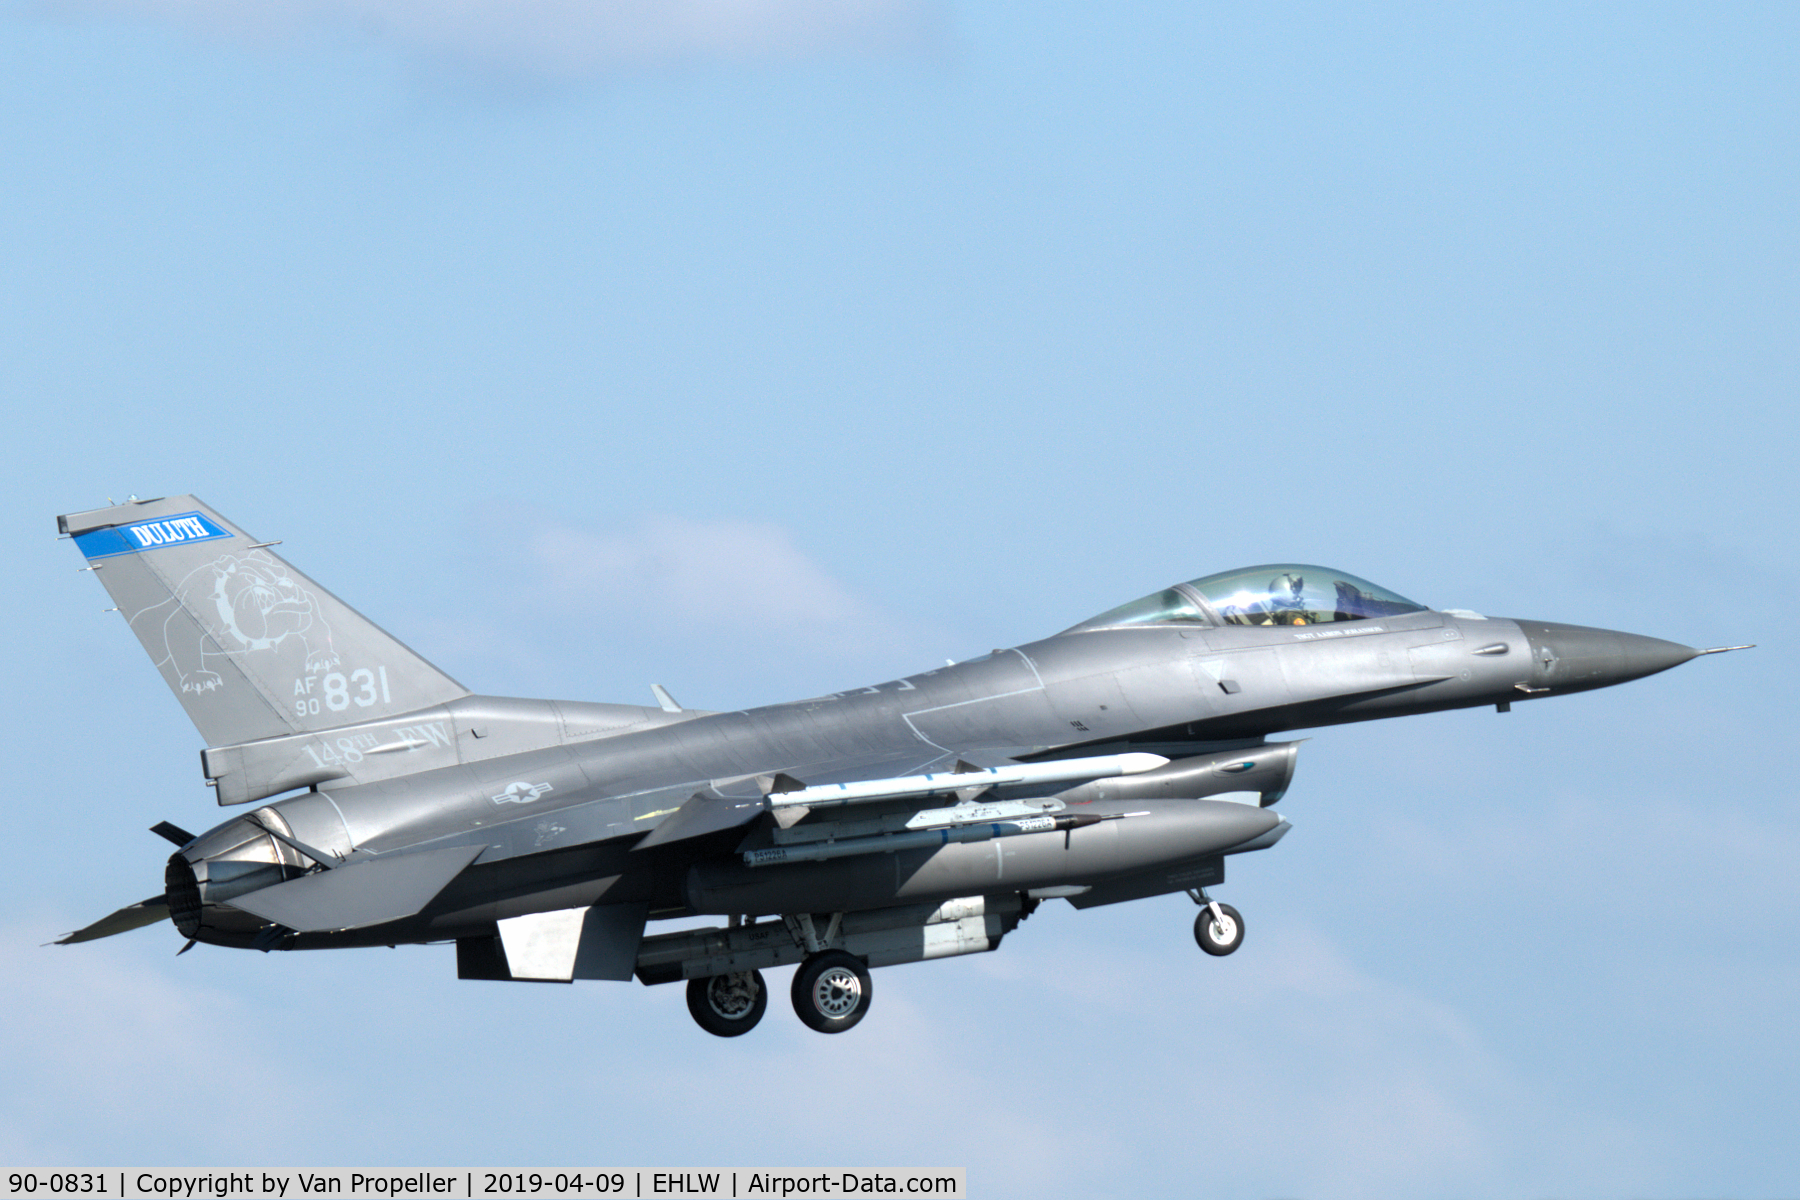 90-0831, 1990 General Dynamics F-16C Fighting Falcon C/N CC-31, Minnesota ANG F-16C landing at Leeuwarden air base, the Netherlands, Frisian Flag 2019